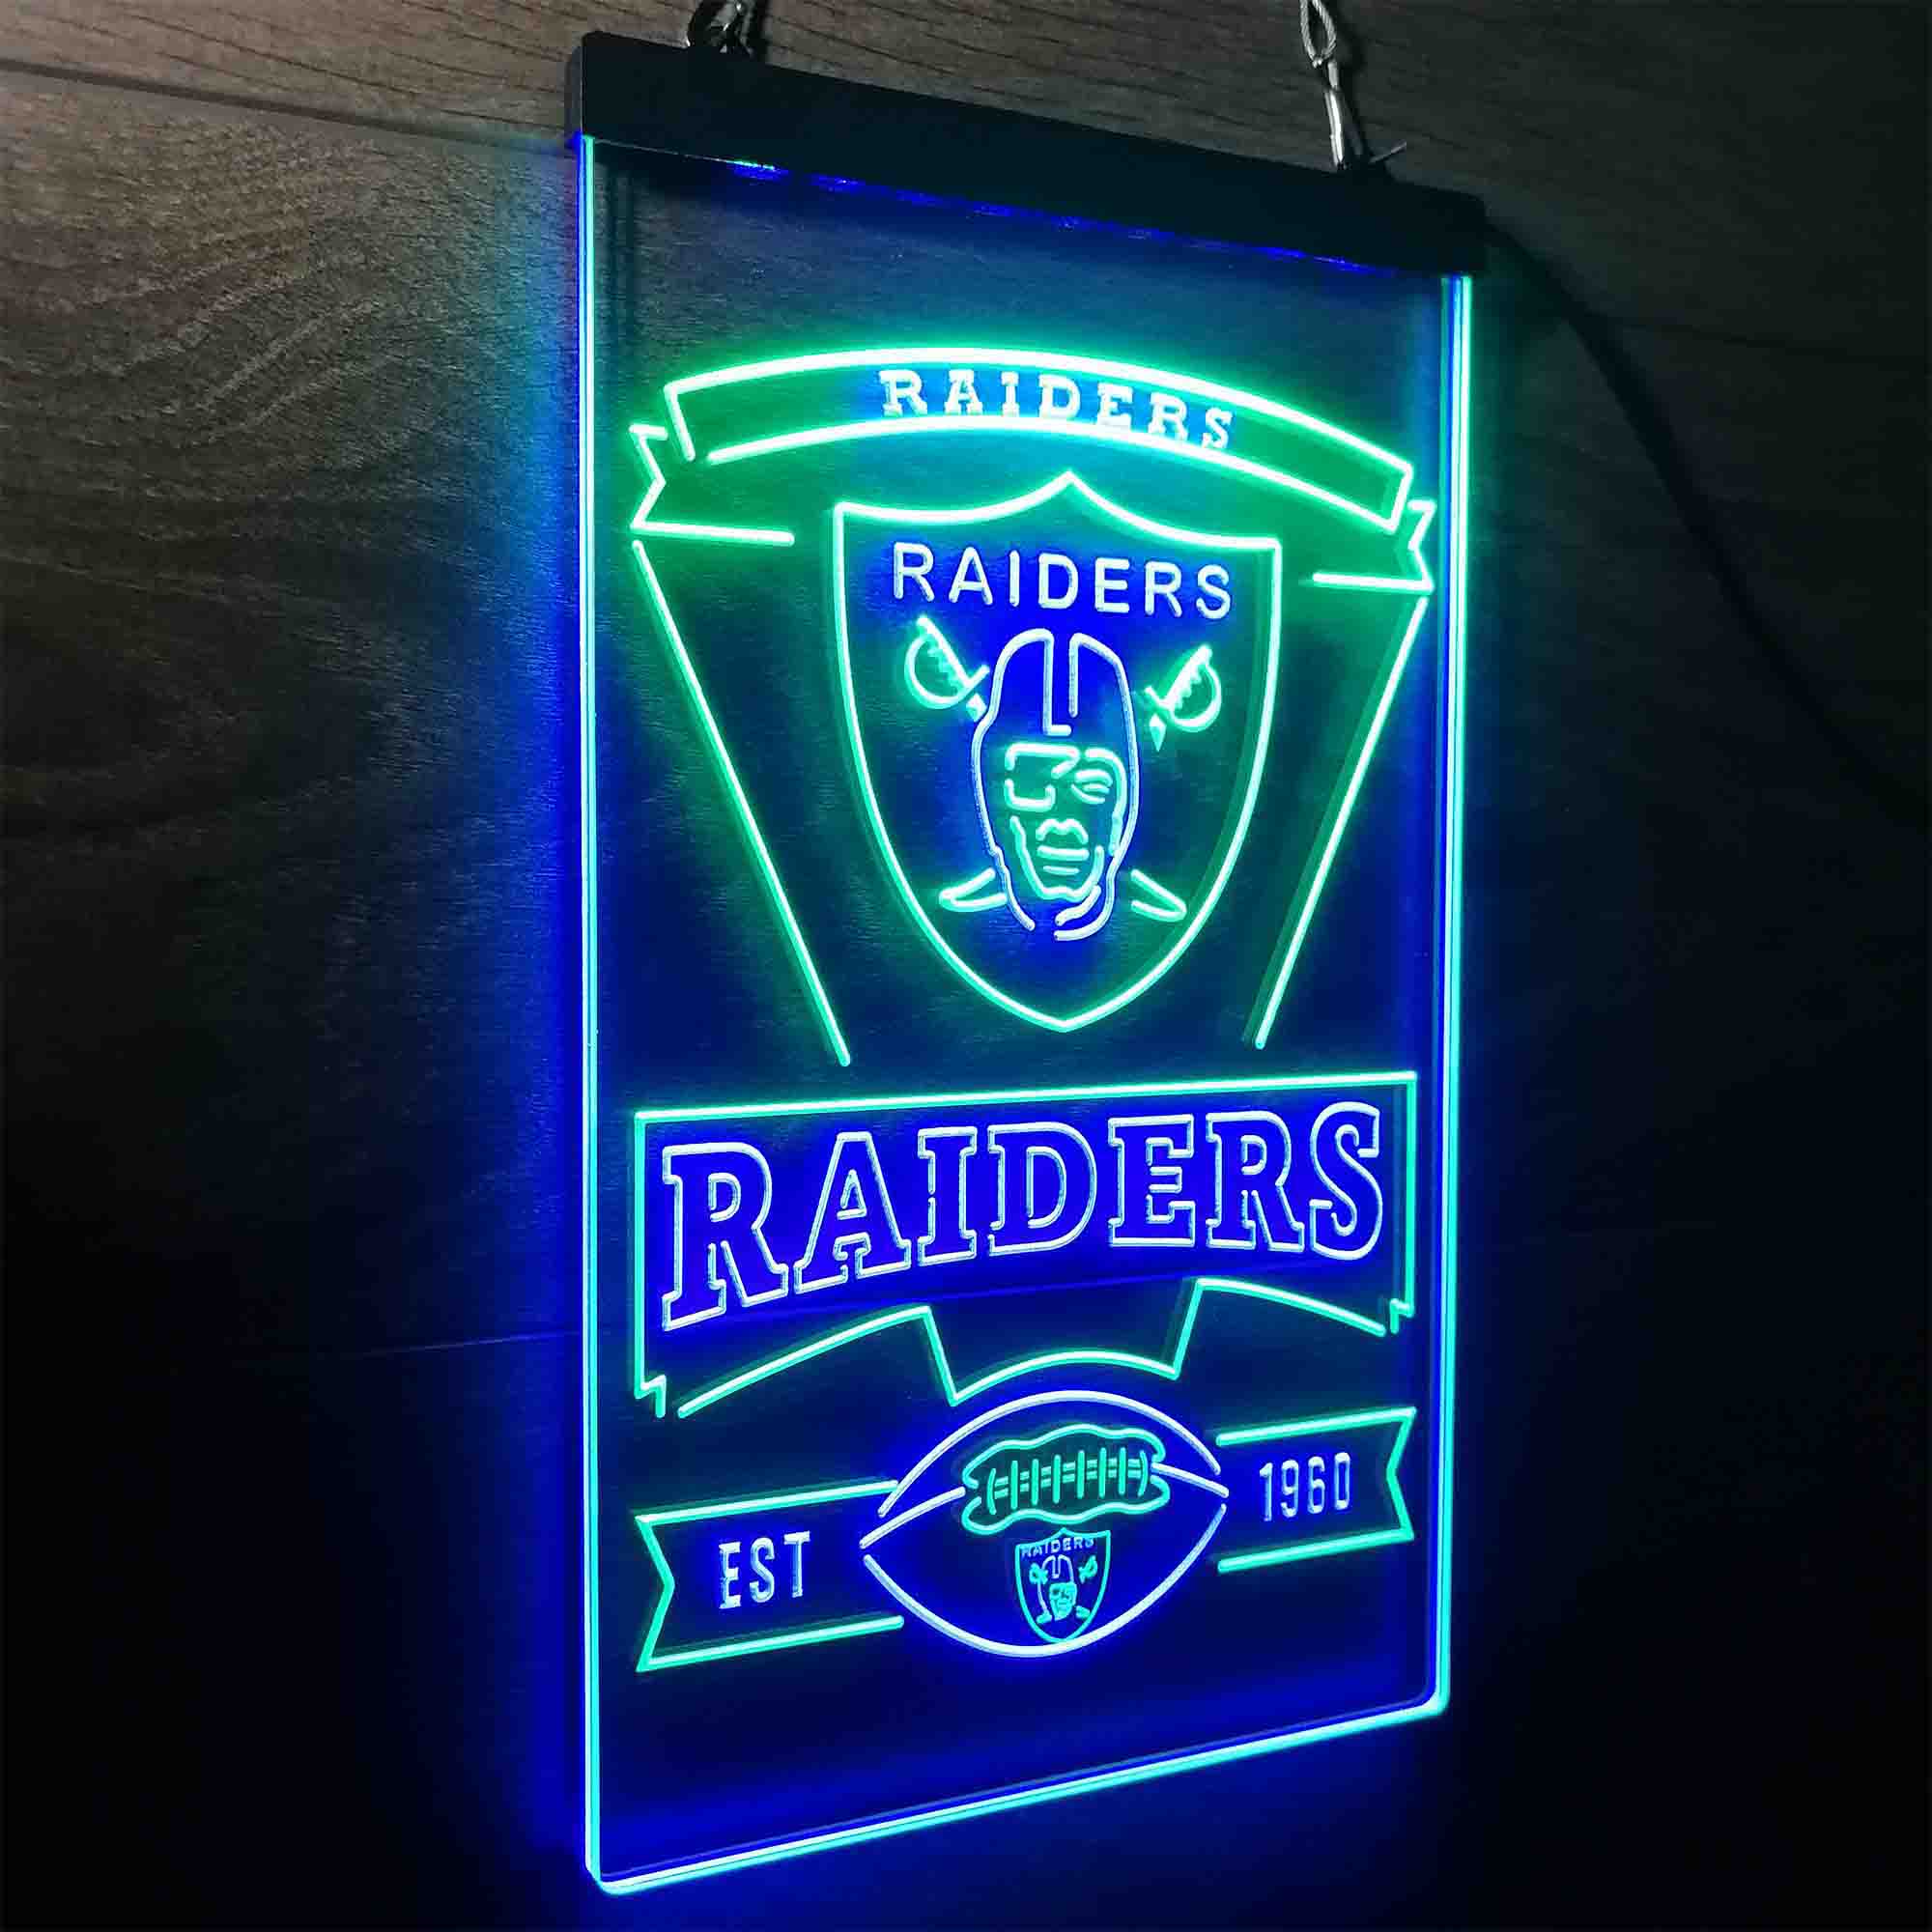 Oakland Raiders Est. 1960 LED Neon Sign